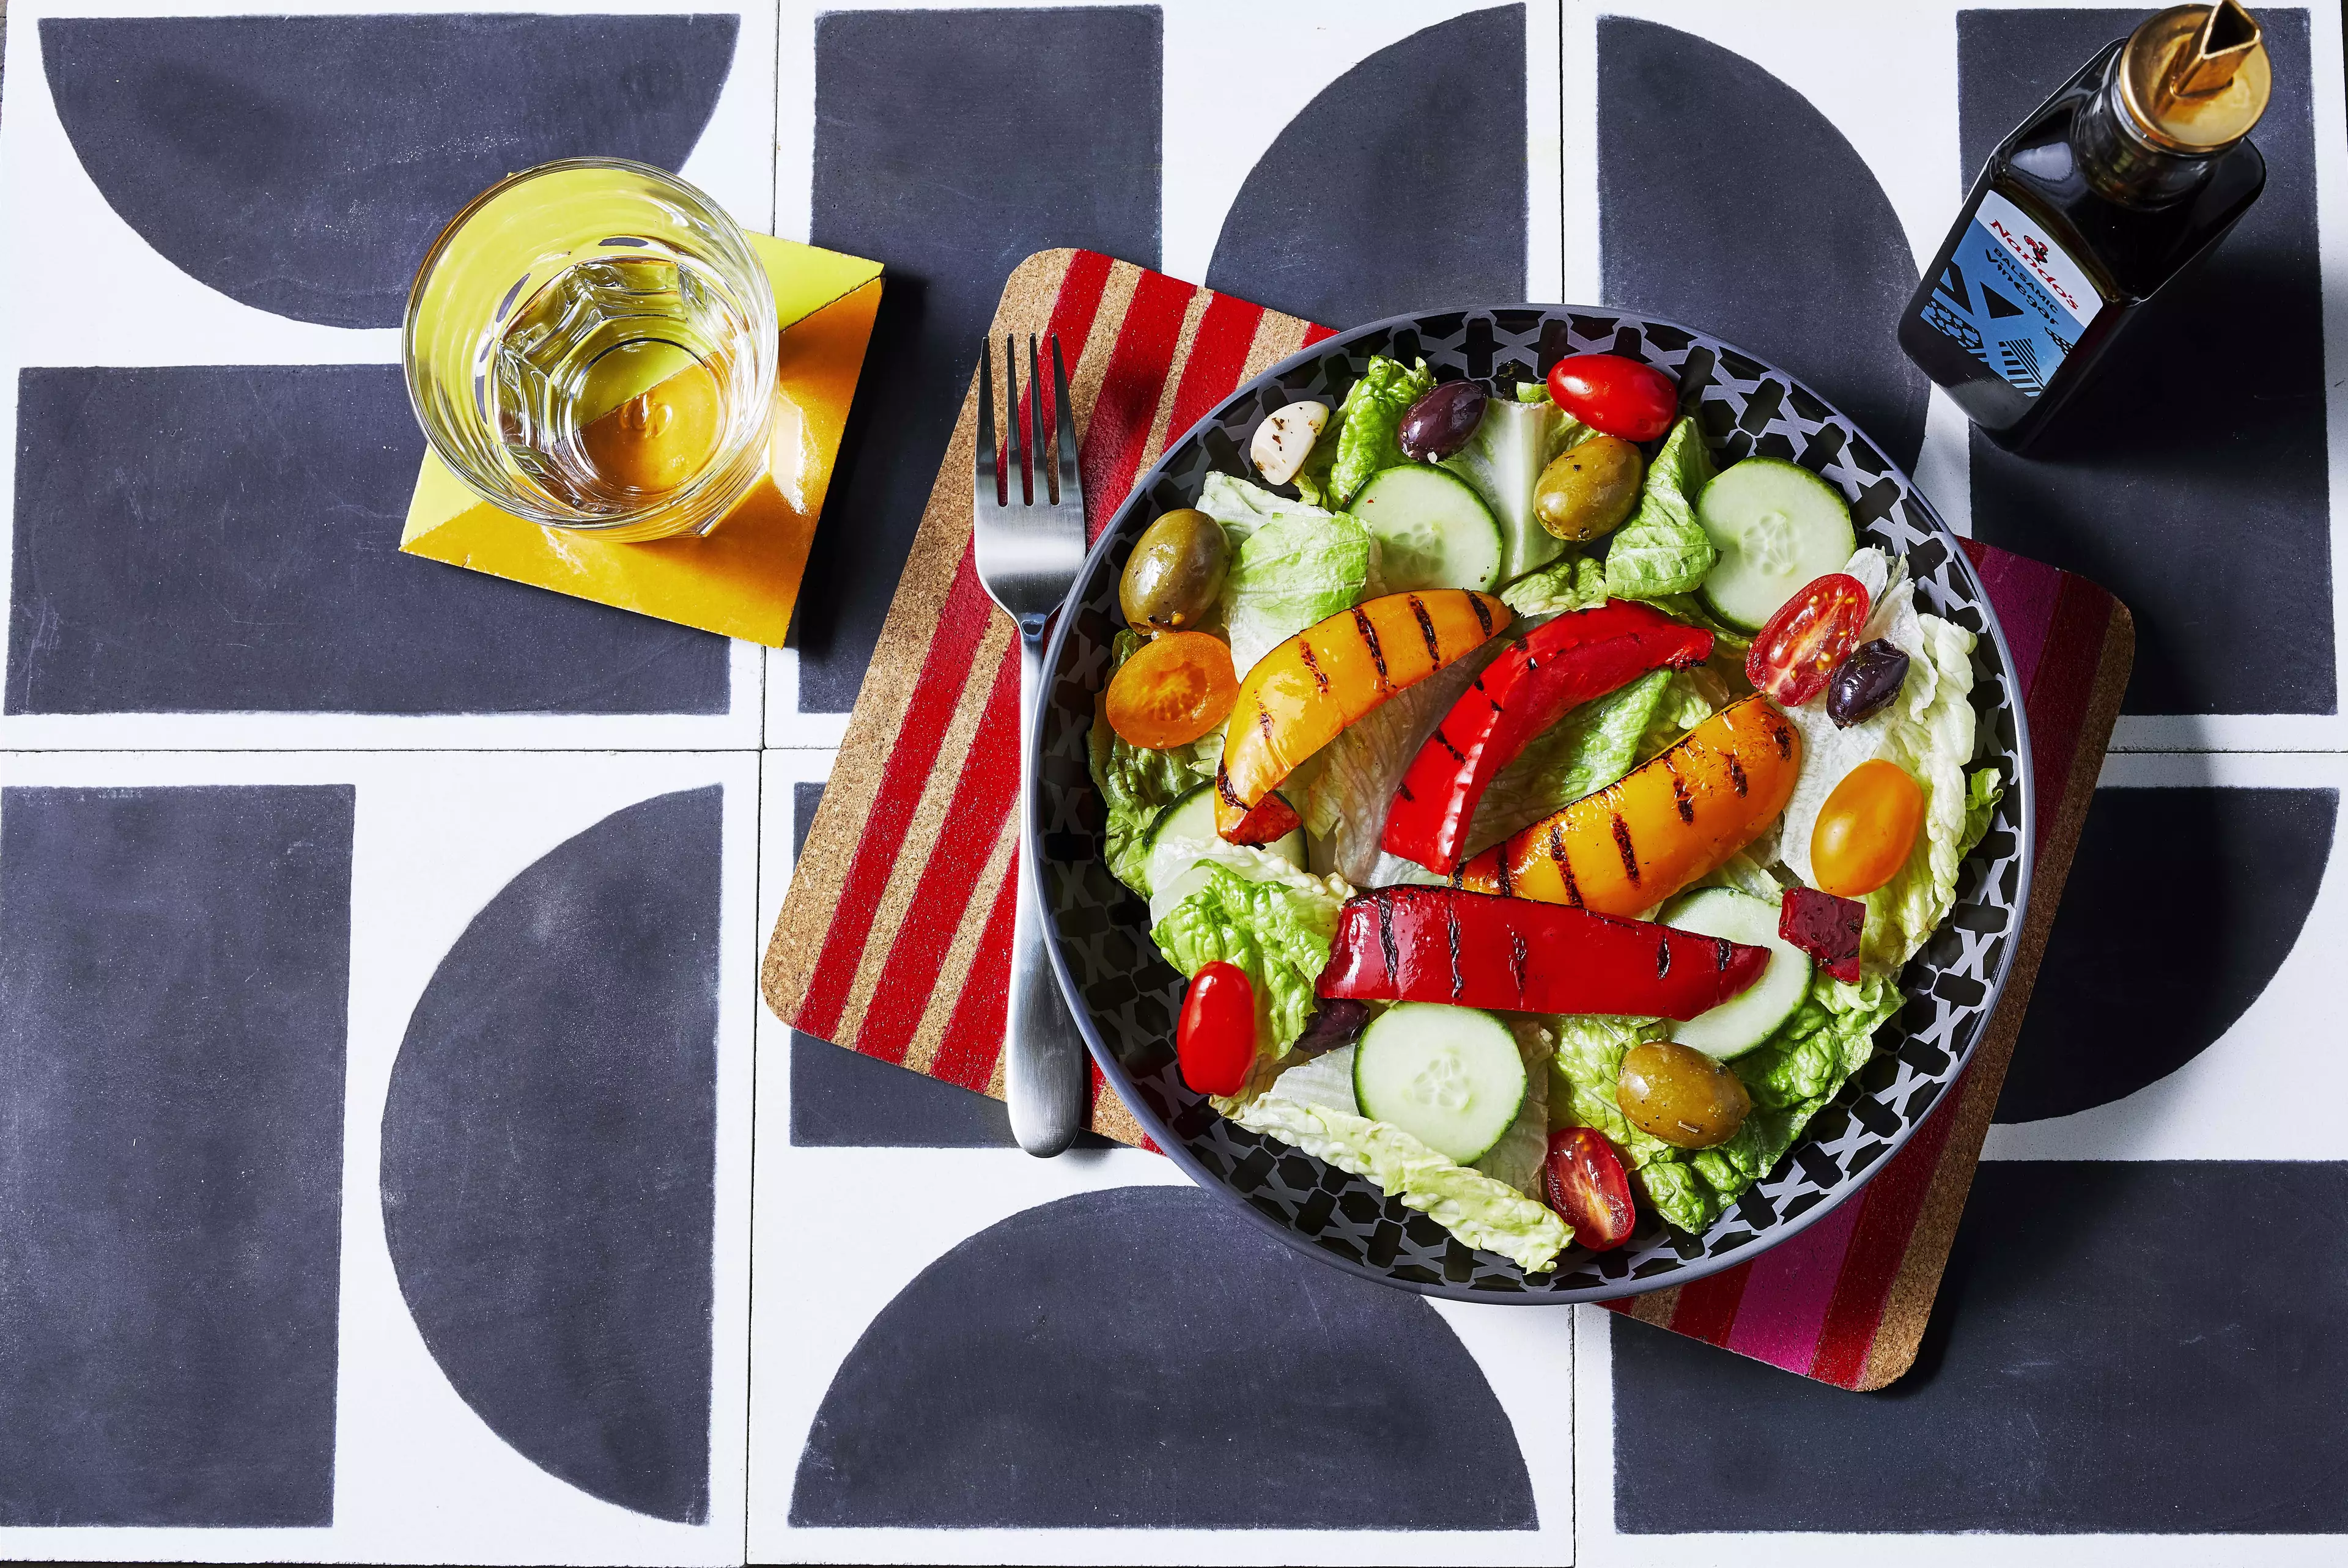 Nando's crunchy and vibrant house salad